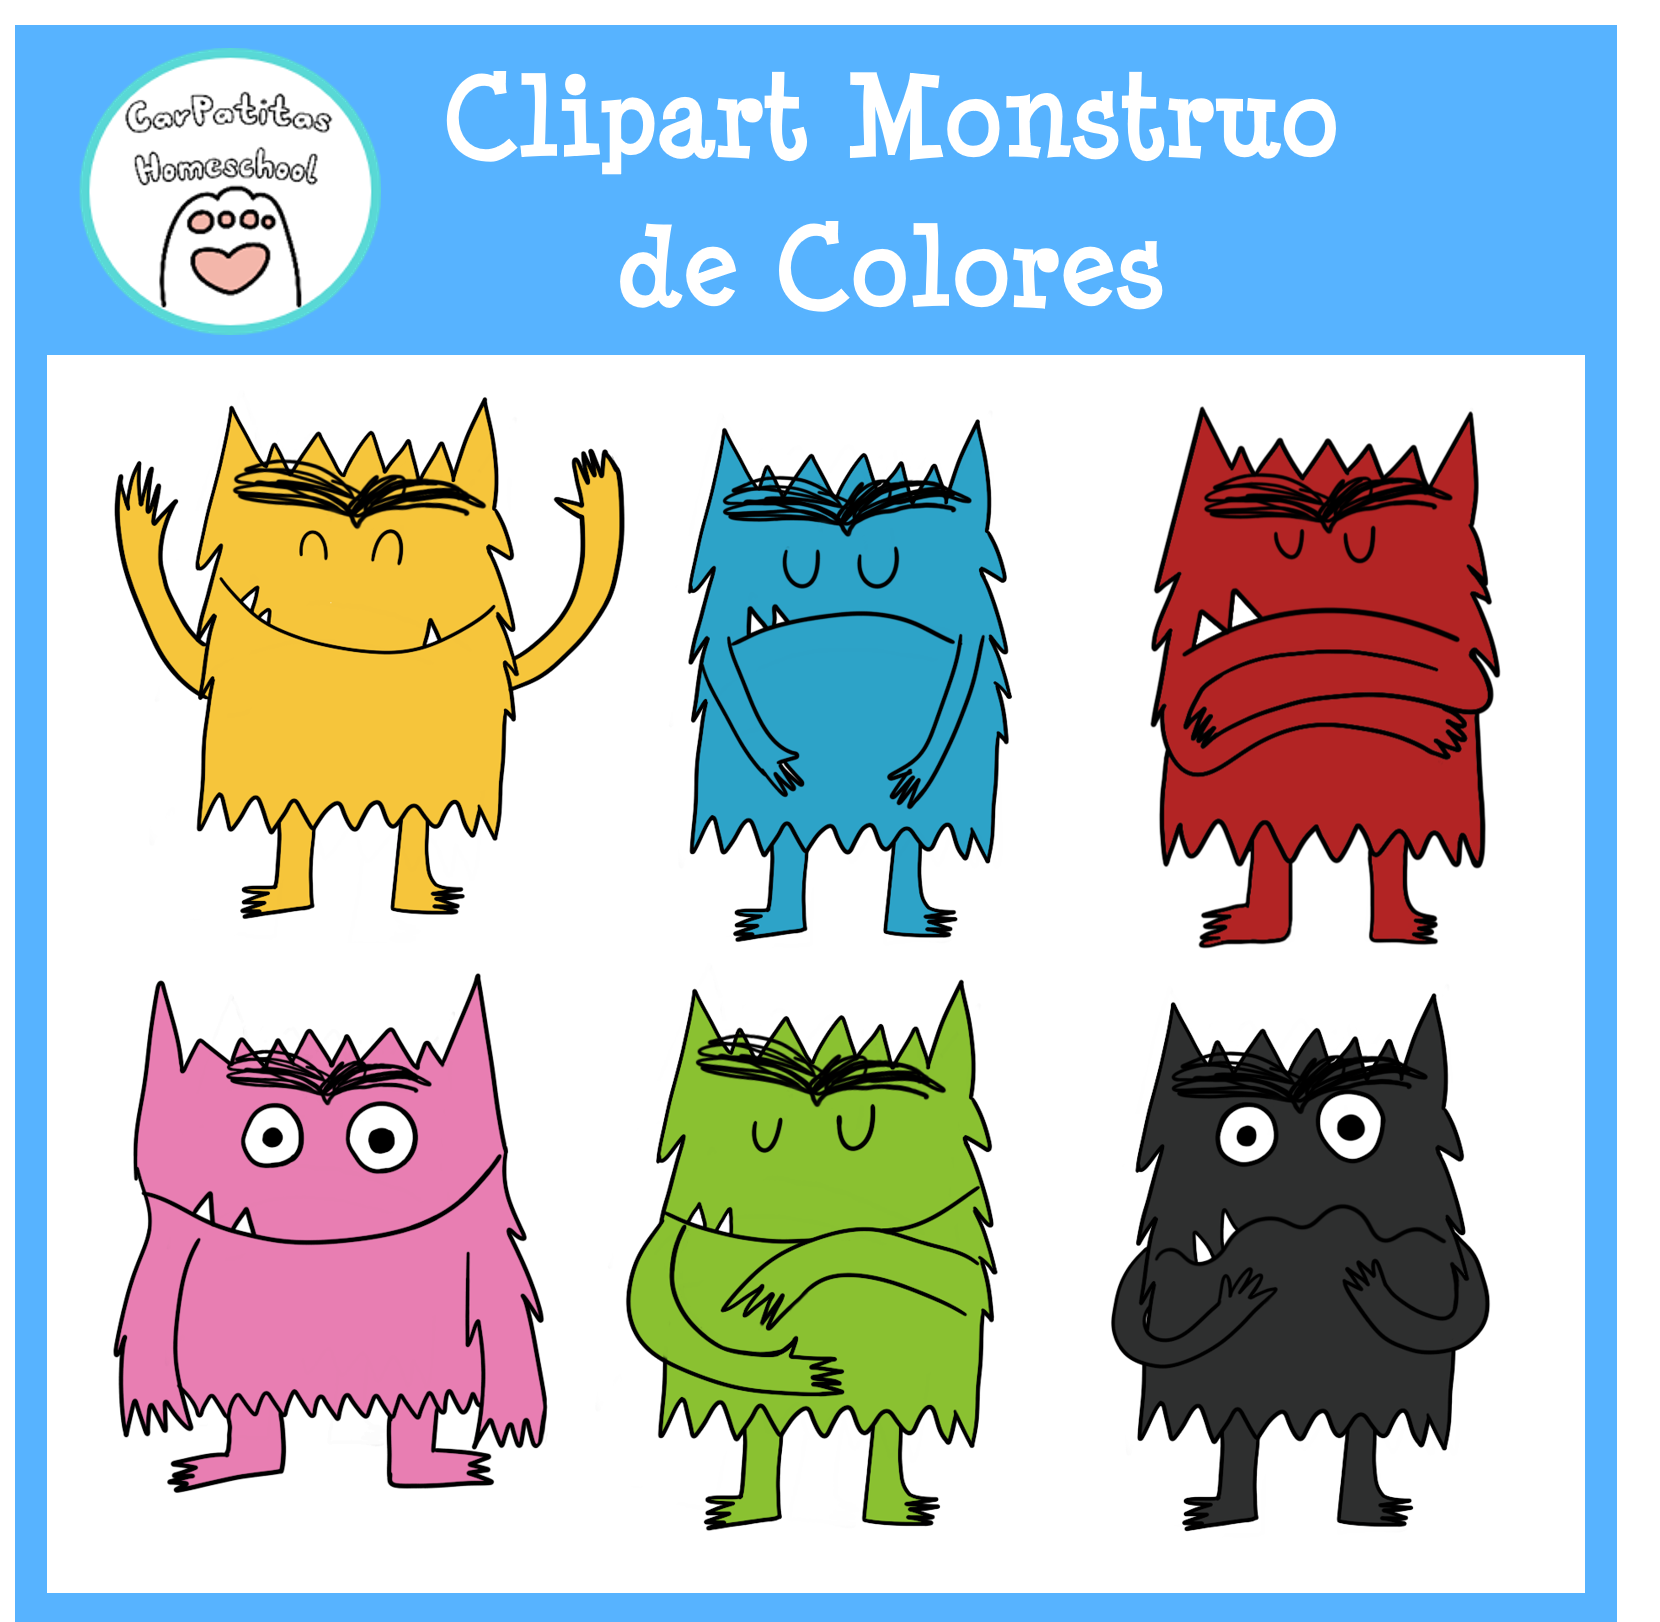 Clipart Monstruo de Colores Ilustraciones